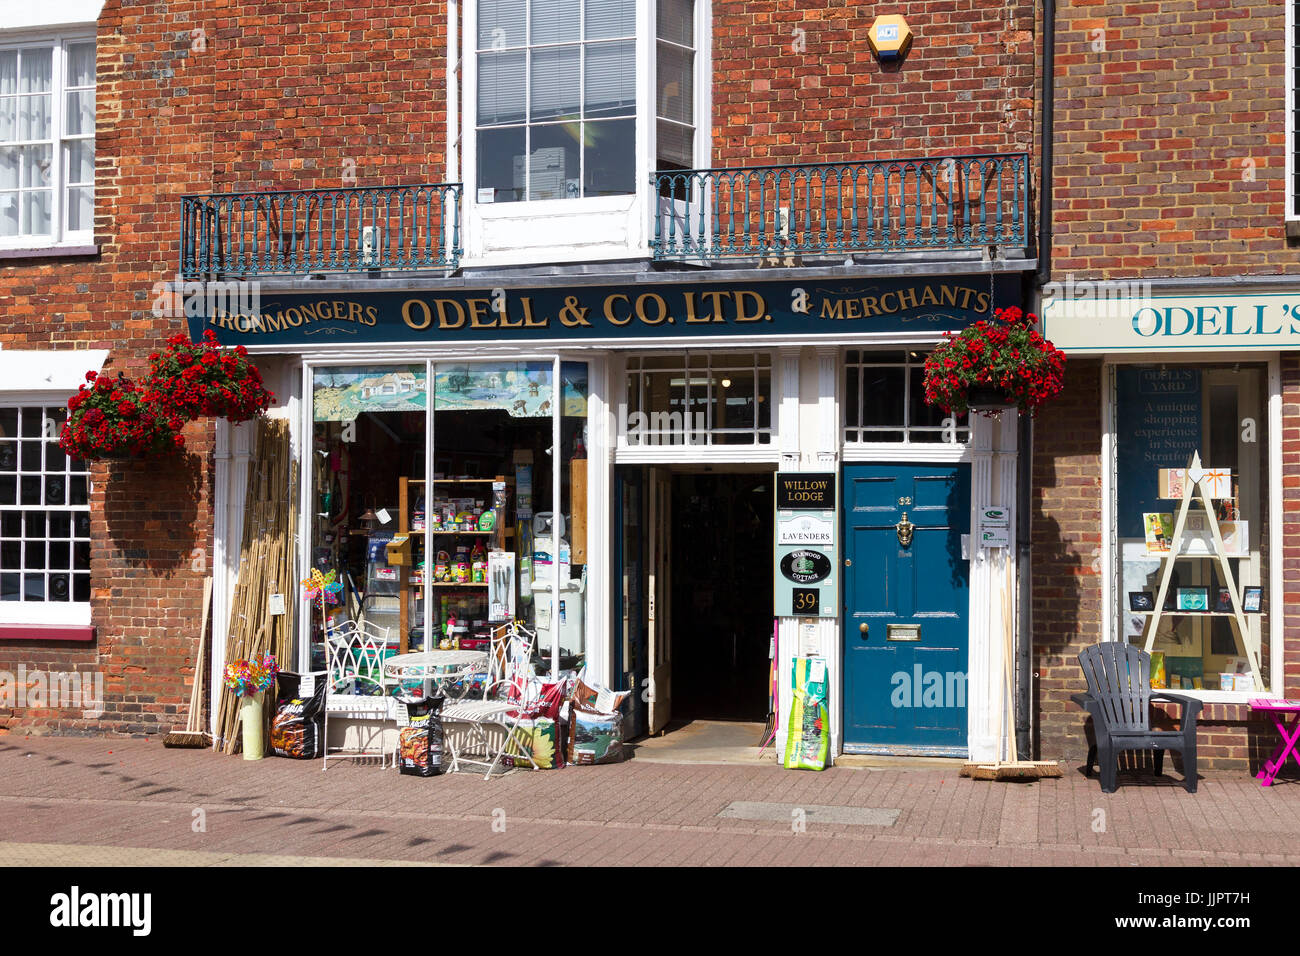 Odell & Co. ltd shop front on the High Street, Stony Stratford, Buckinghamshire, uk Stock Photo